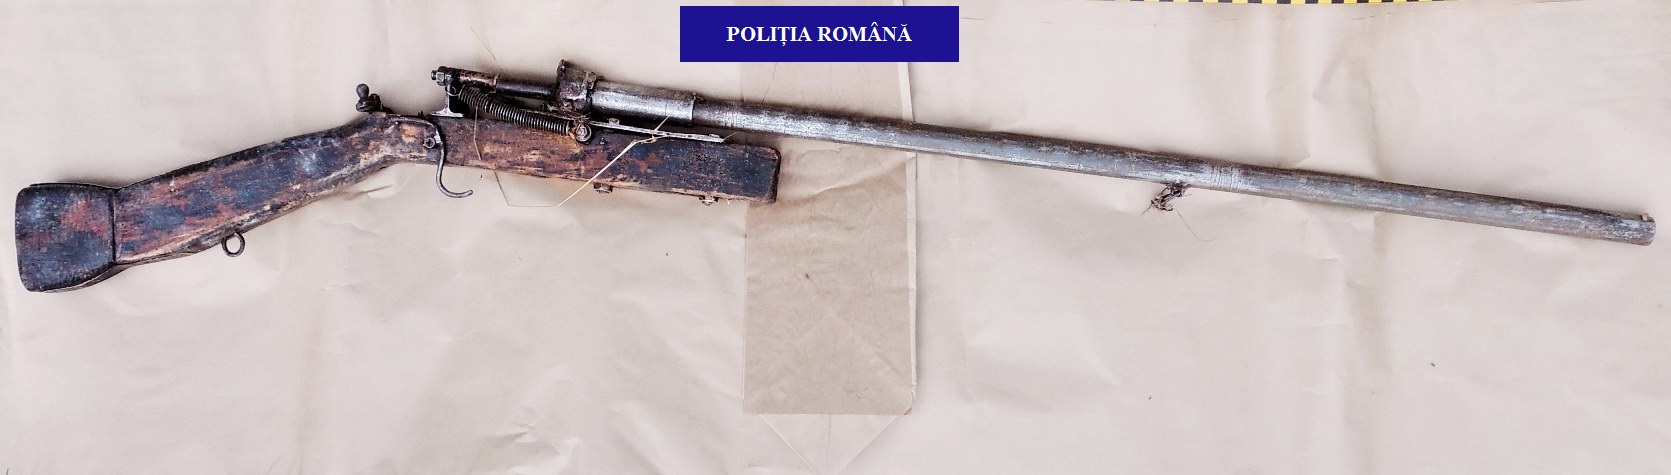 FOTO: Arme confiscate Ceica 25.06.2020